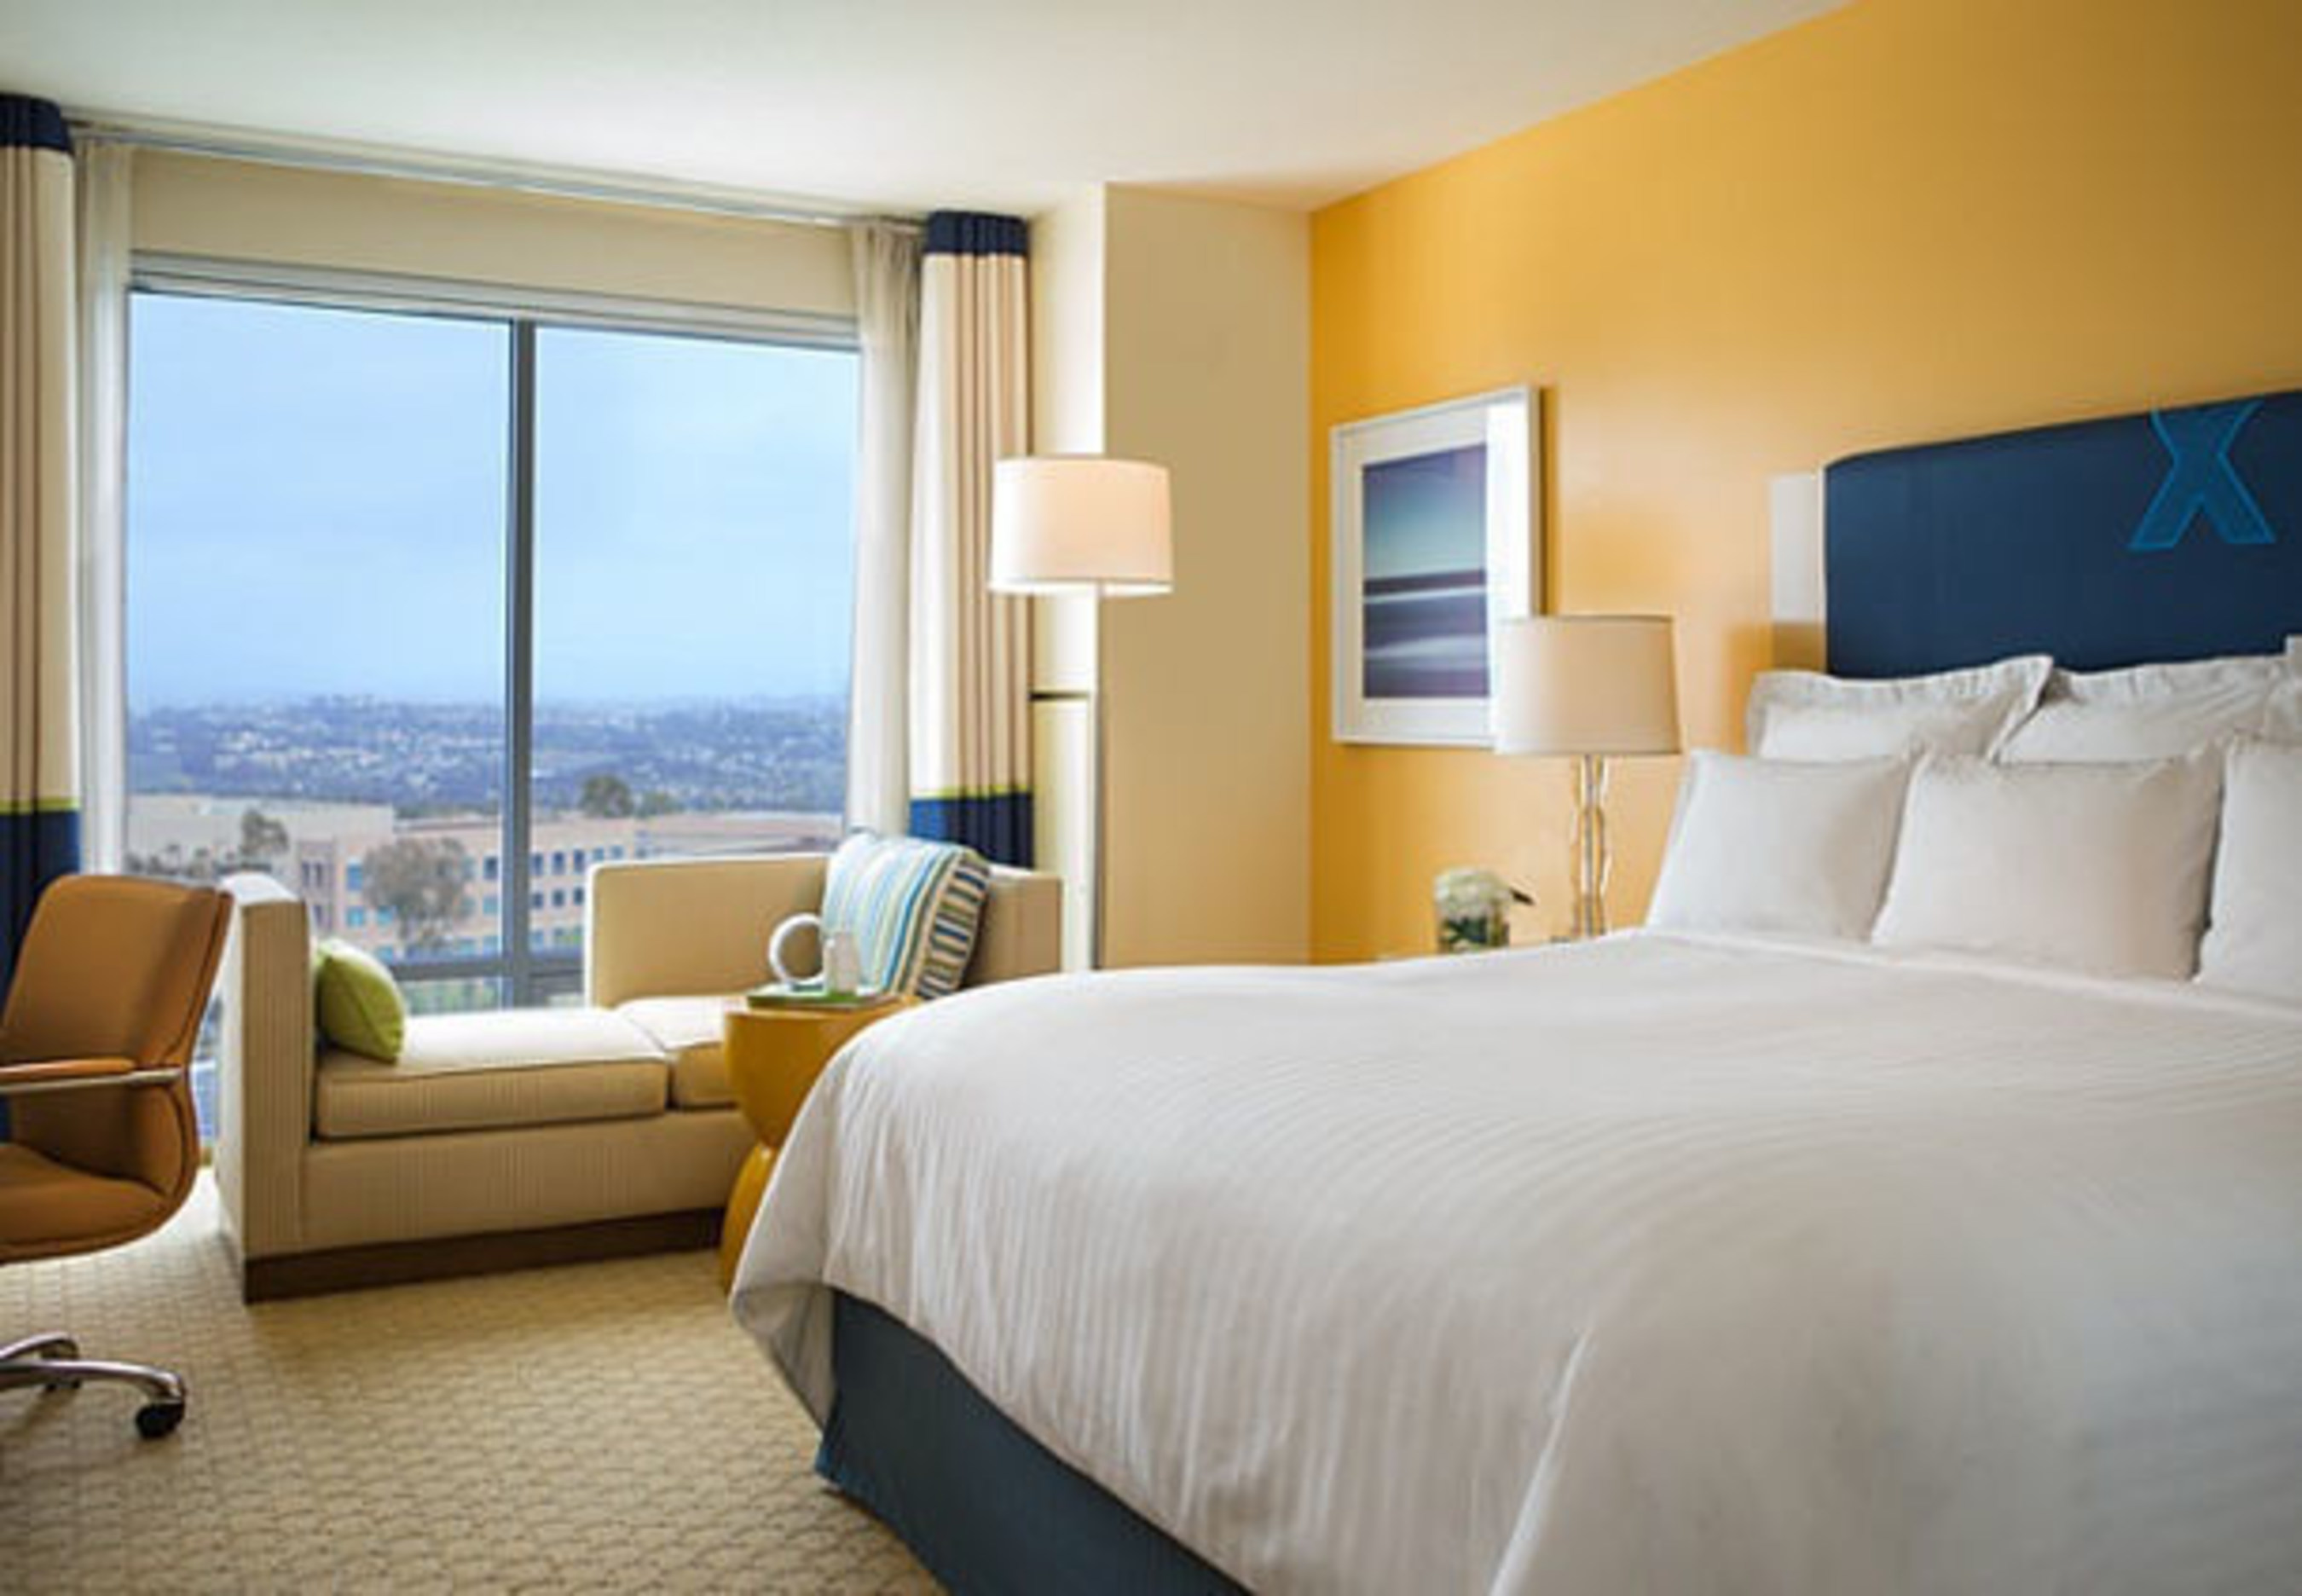 Hotel detail. Побережье отелей в США. Каталог гостиницы. Kalyon Hotel Deluxe Room City view Bed & Breakfast.